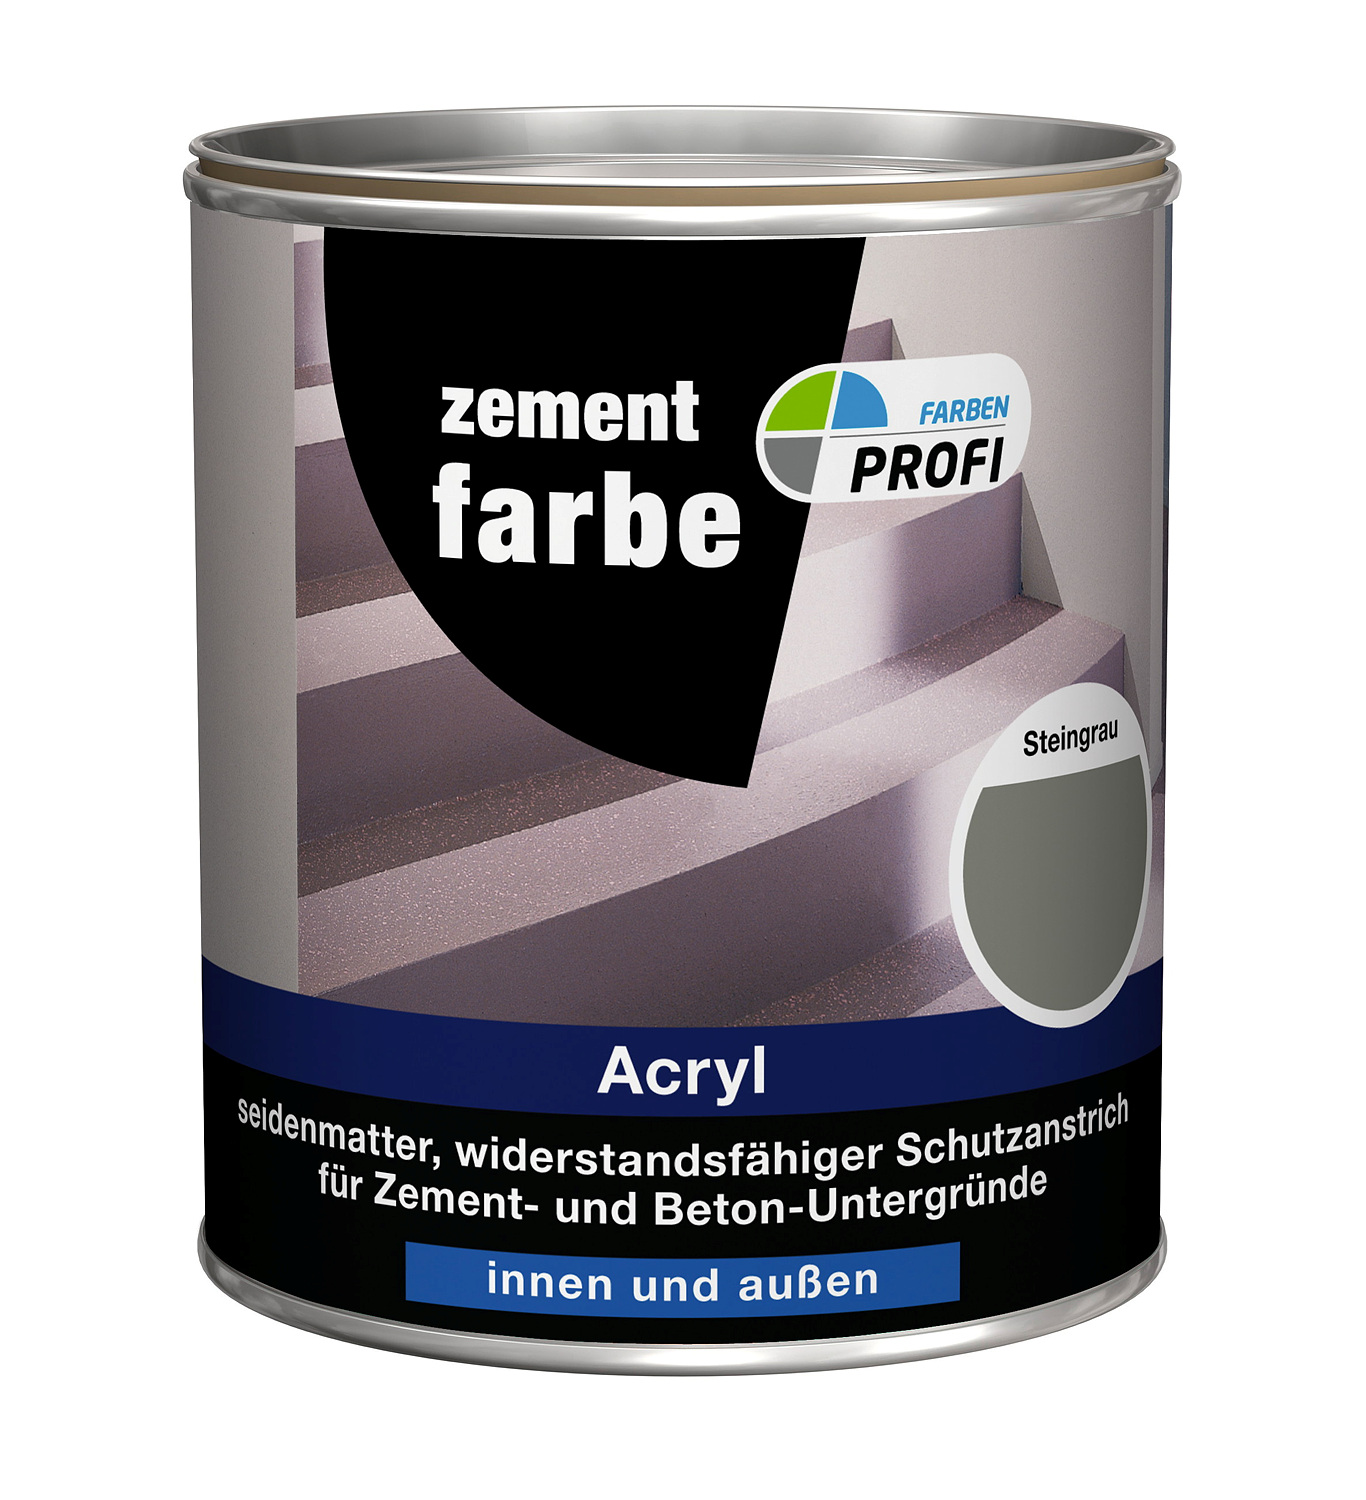 PROFI Acryl Zementfarbe Steingrau 750 ml, seidenmatt